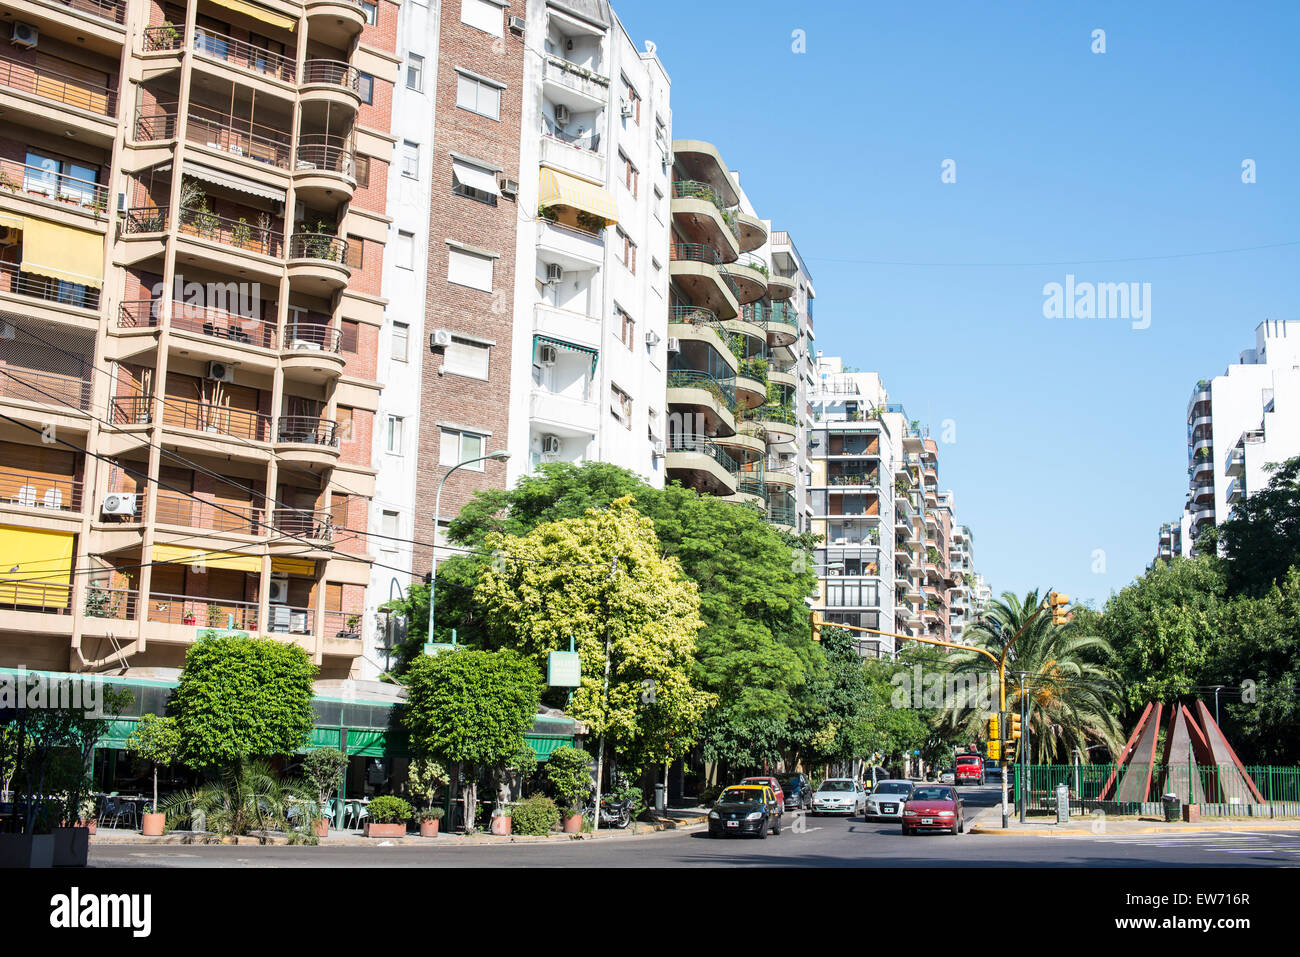 Residential apartment blocks, Buenos Aires Stock Photo